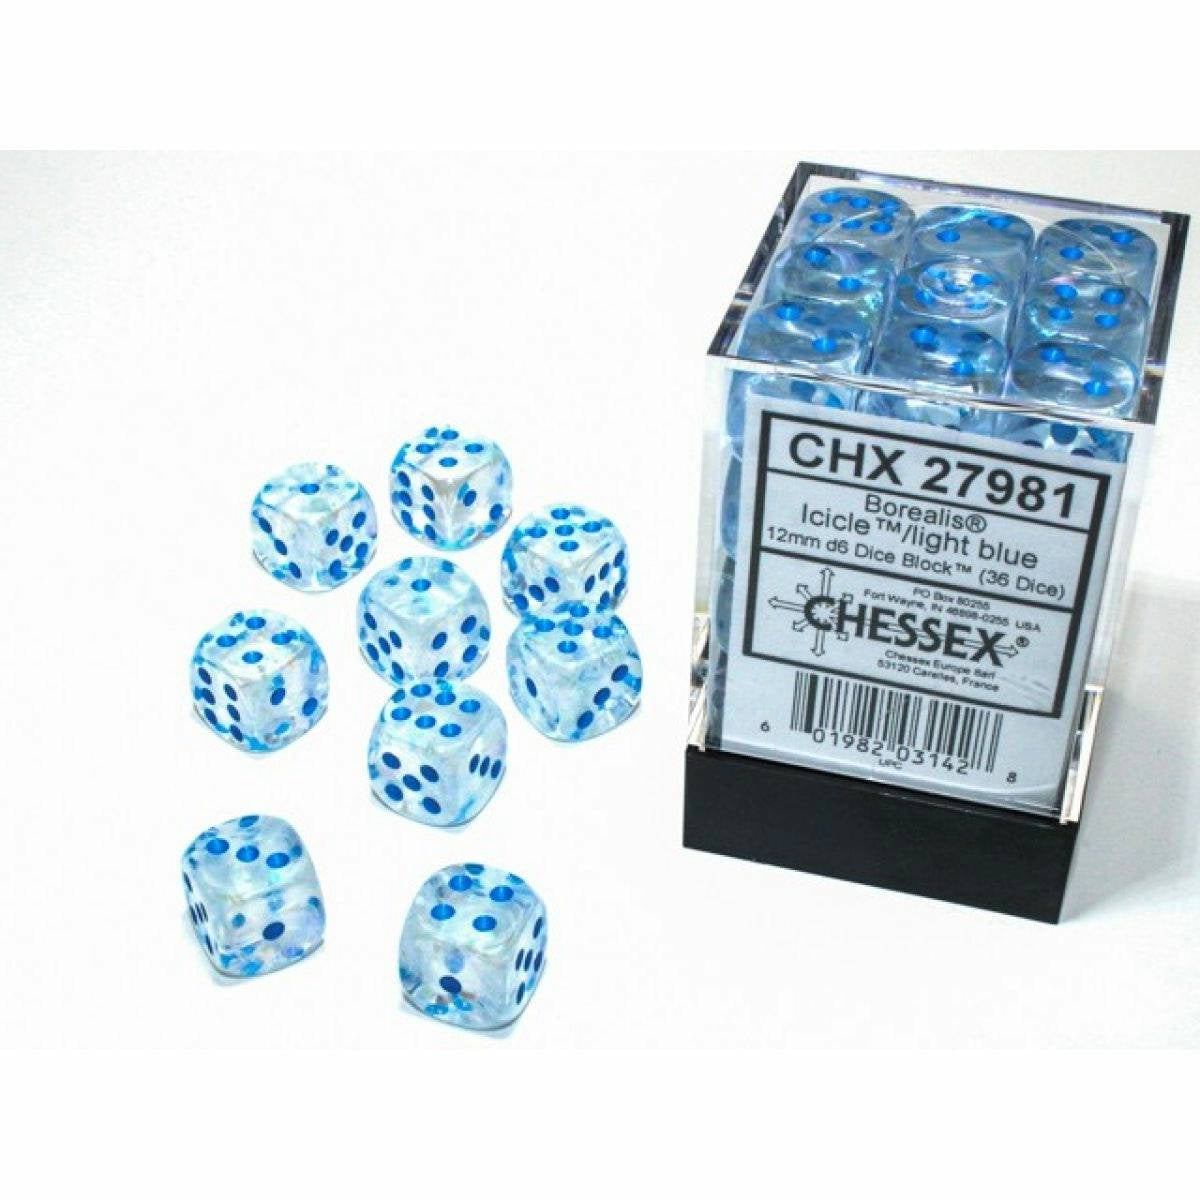 Chessex - Borealis 12mm D6 Icicle/Light Blue Luminary Block (36) CHX 27981